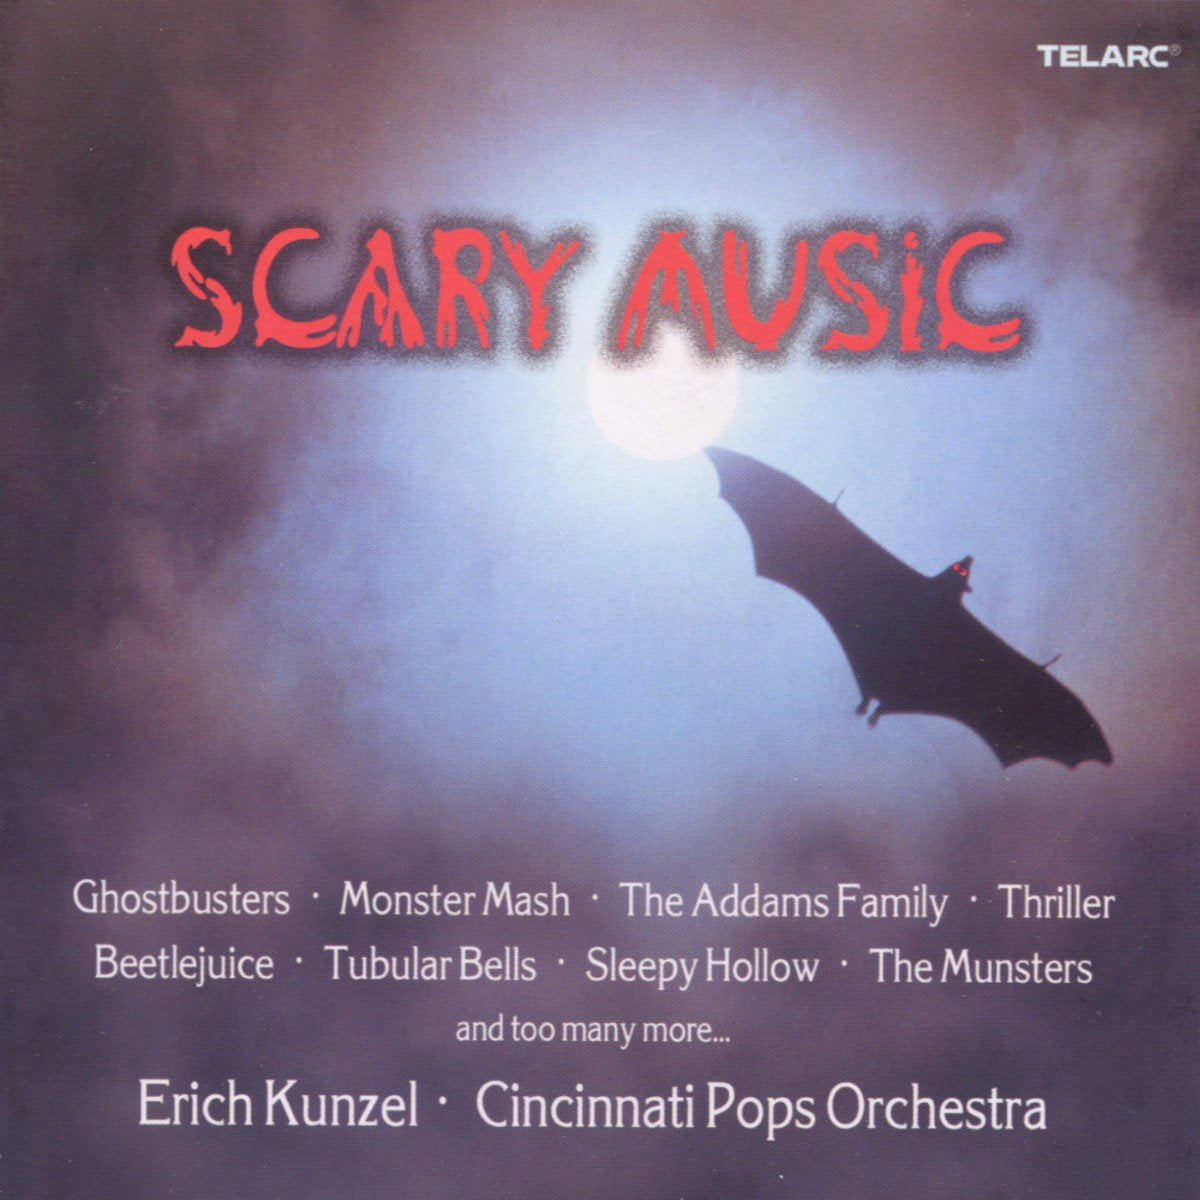 SCARY MUSIC - ERICH KUNZEL & CINCINNATI POPS ORCHESTRA